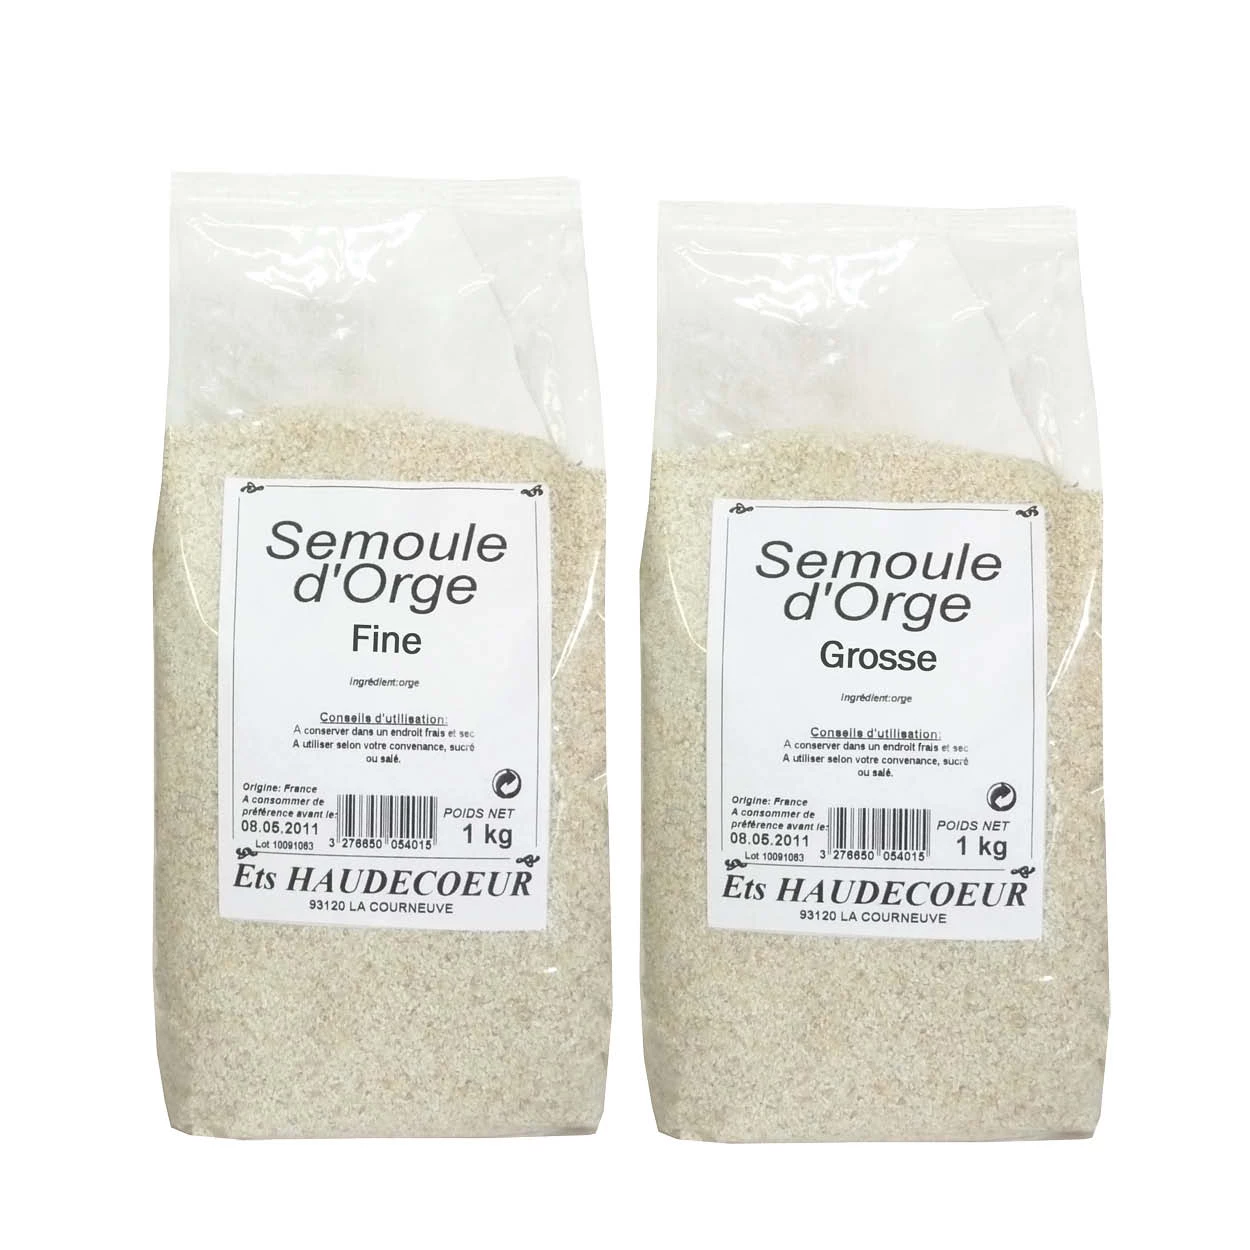 细大麦粗面粉 1kg 浓缩液 A - Legumor